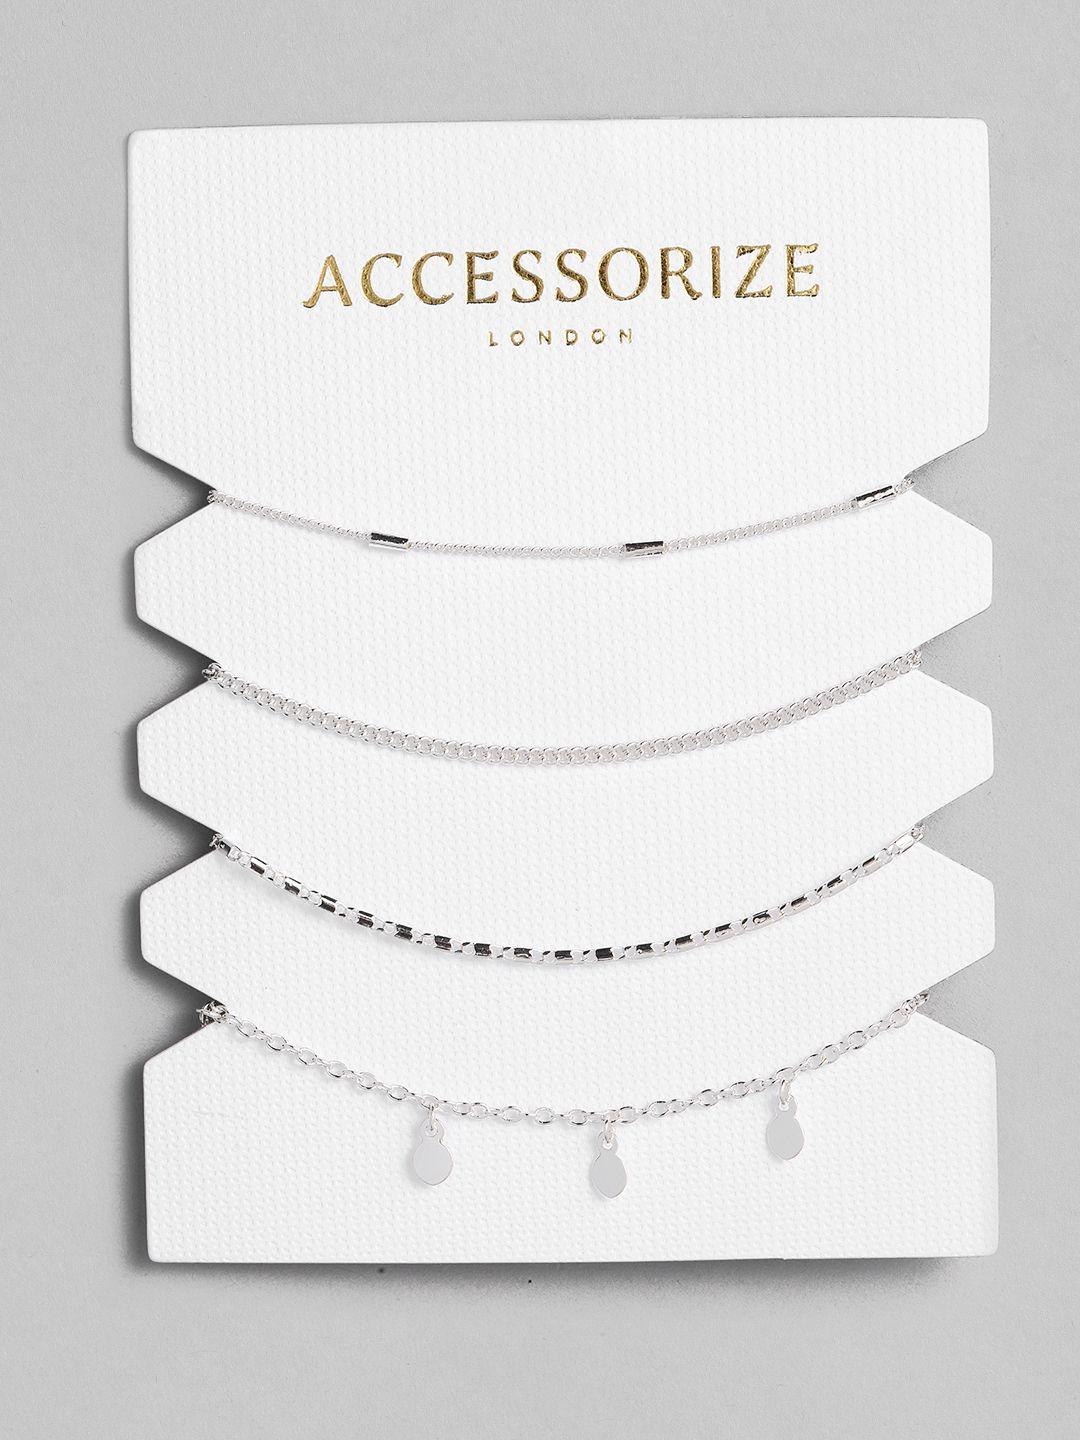 accessorize set of 4 silver-toned charm bracelets